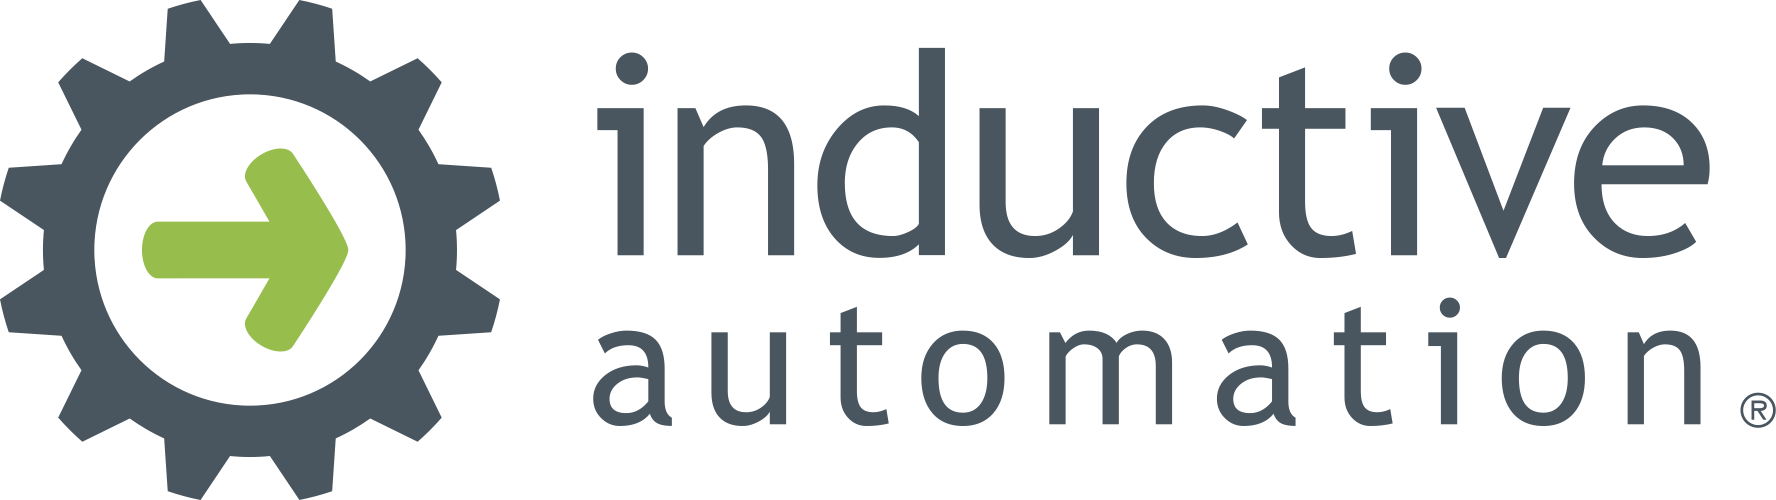 Inductive Automation logo